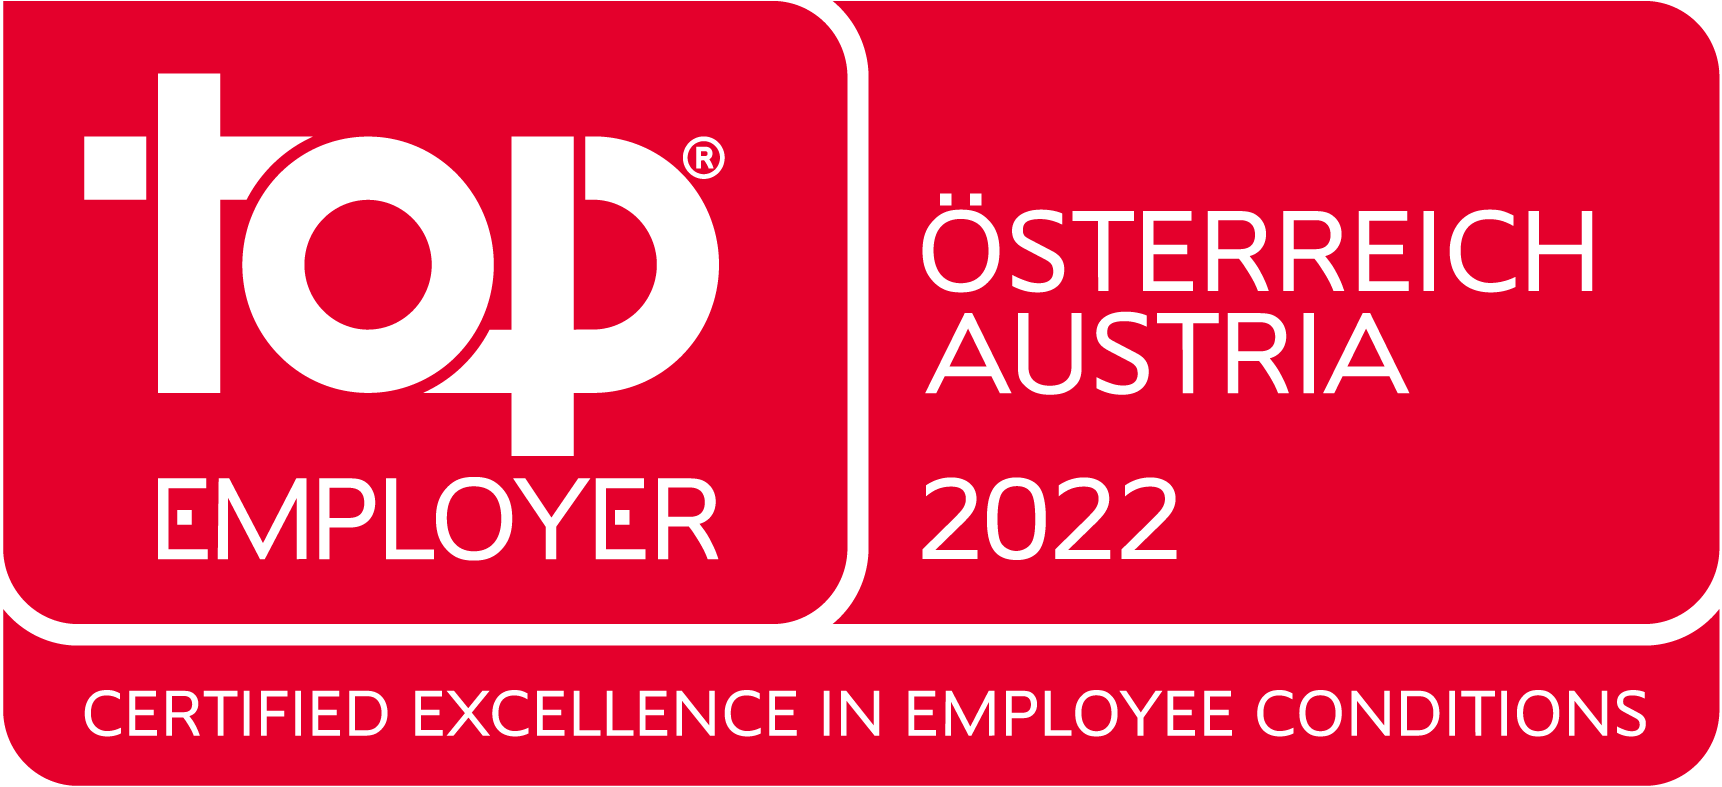 Austria Top Employer 2022 logo